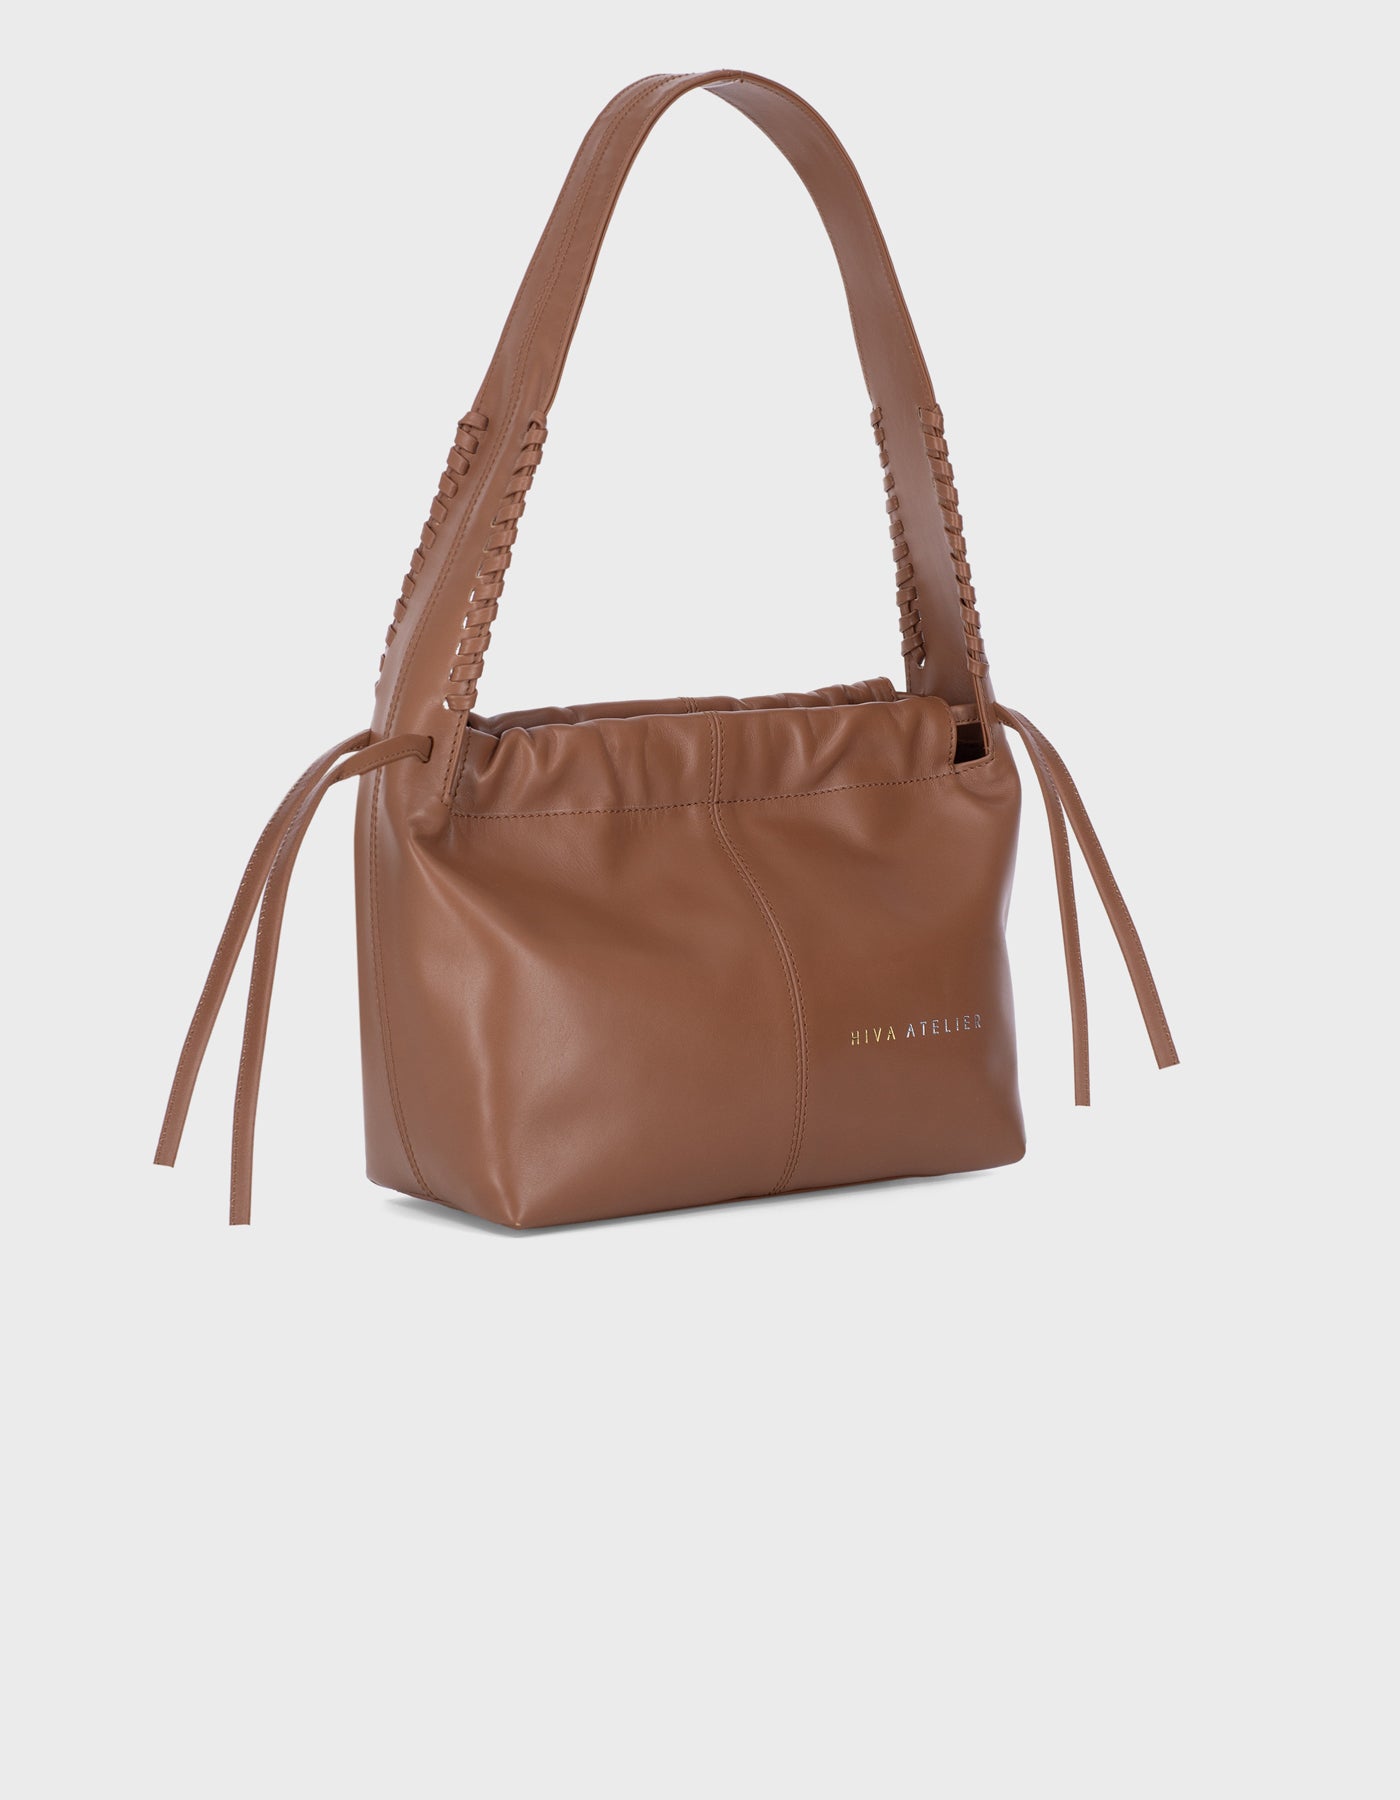 Hiva Atelier | All Day Mini Bucket Bag Smooth Wood | Beautiful and Versatile